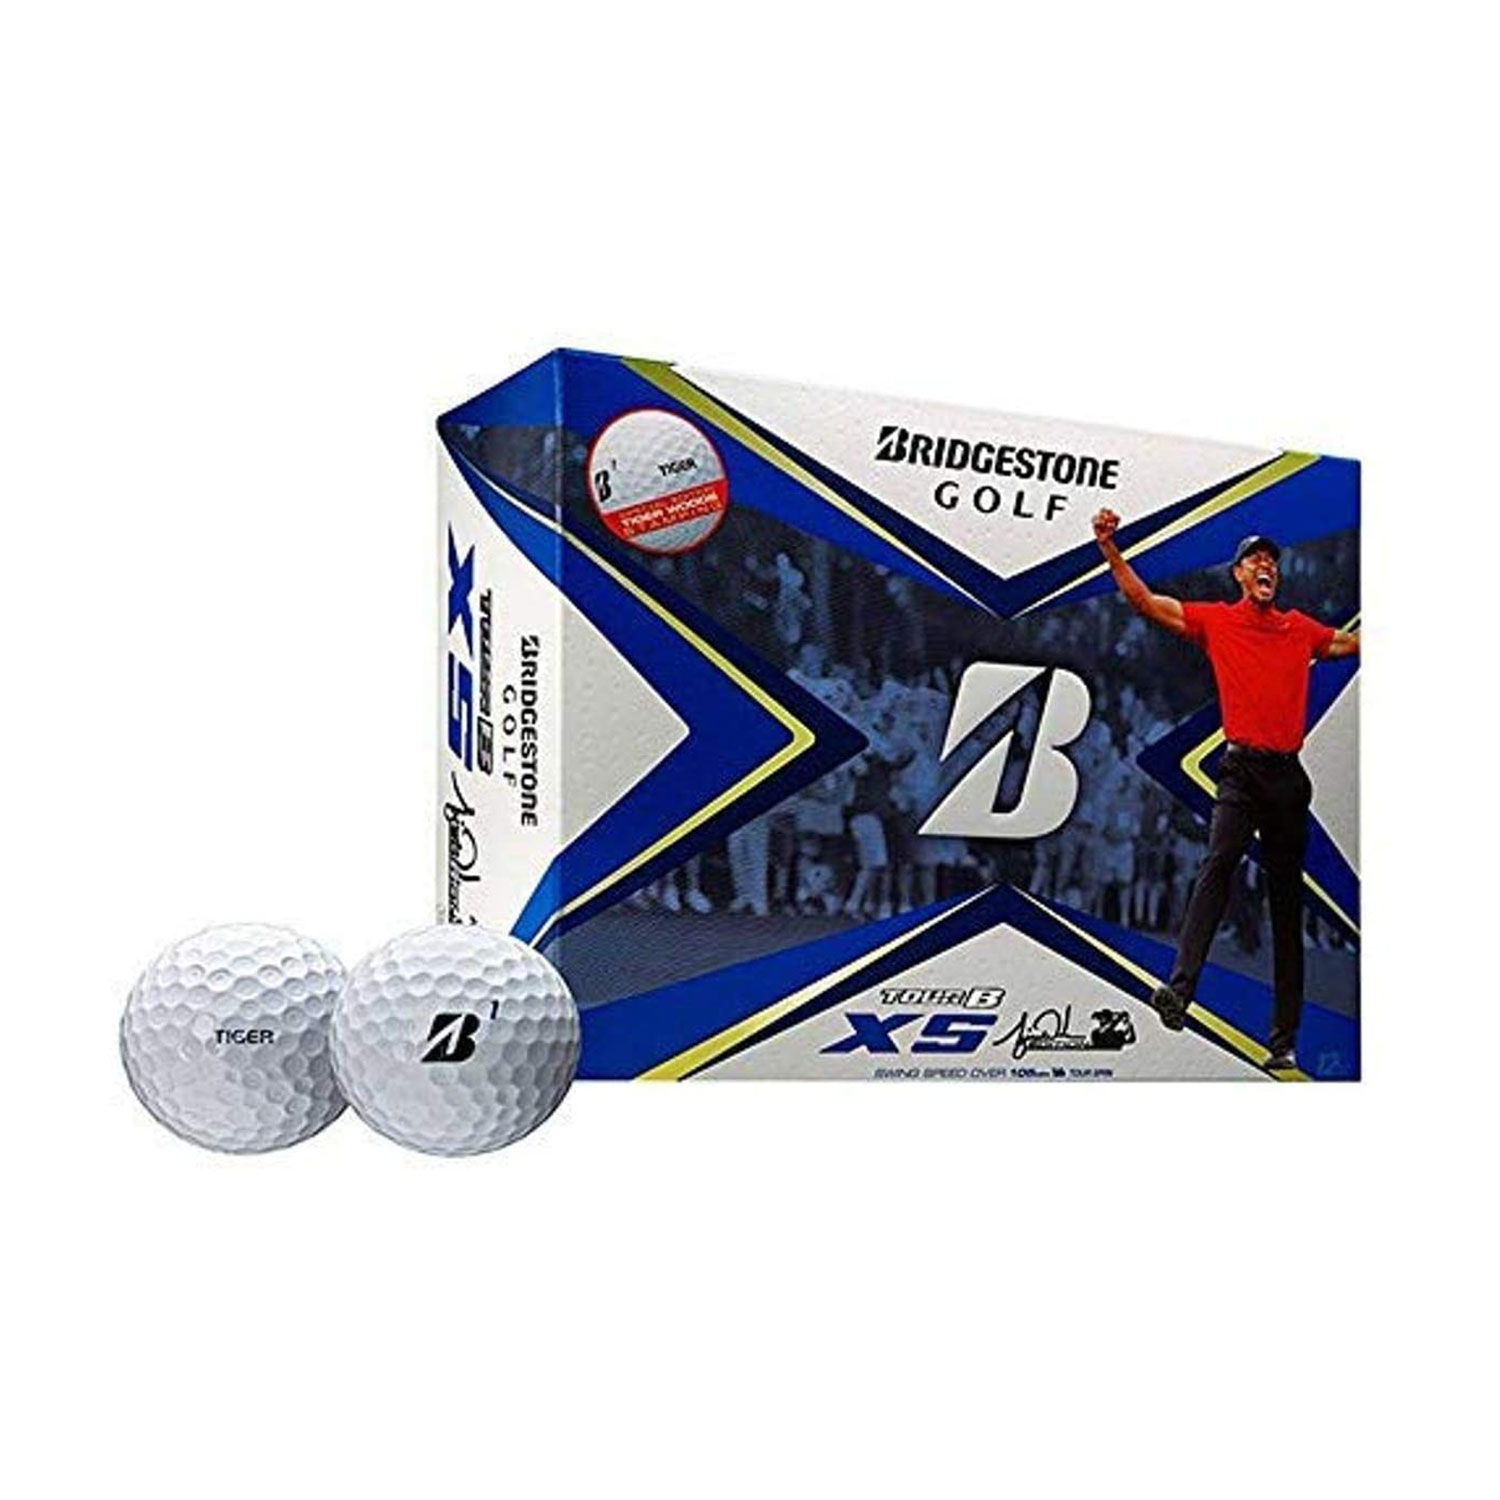 Bridgestone Golf Tour B XS Model Soft Distance Golf Balls, Yellow, 1 Dozen - image 1 of 5